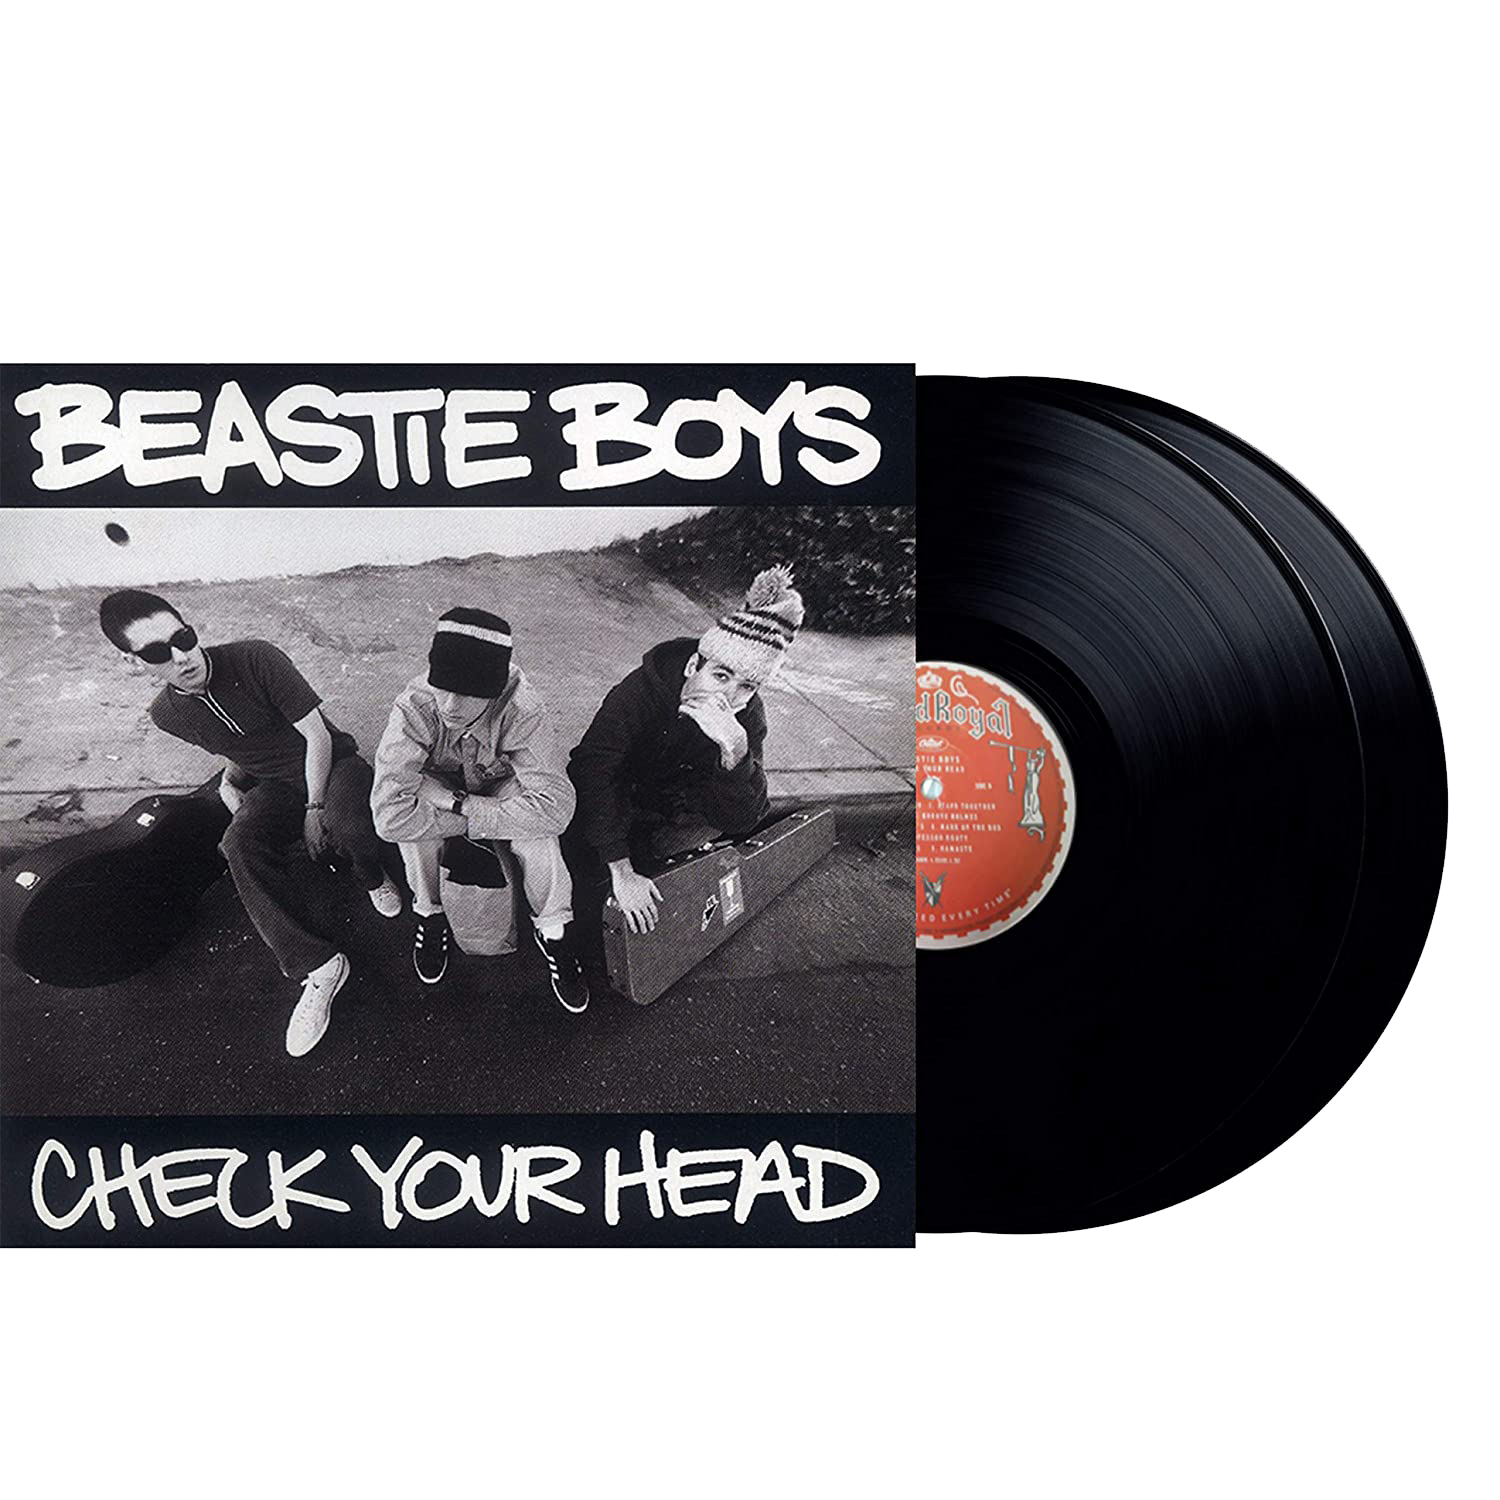 Beastie Boys - Check Your Head - 2 x LP